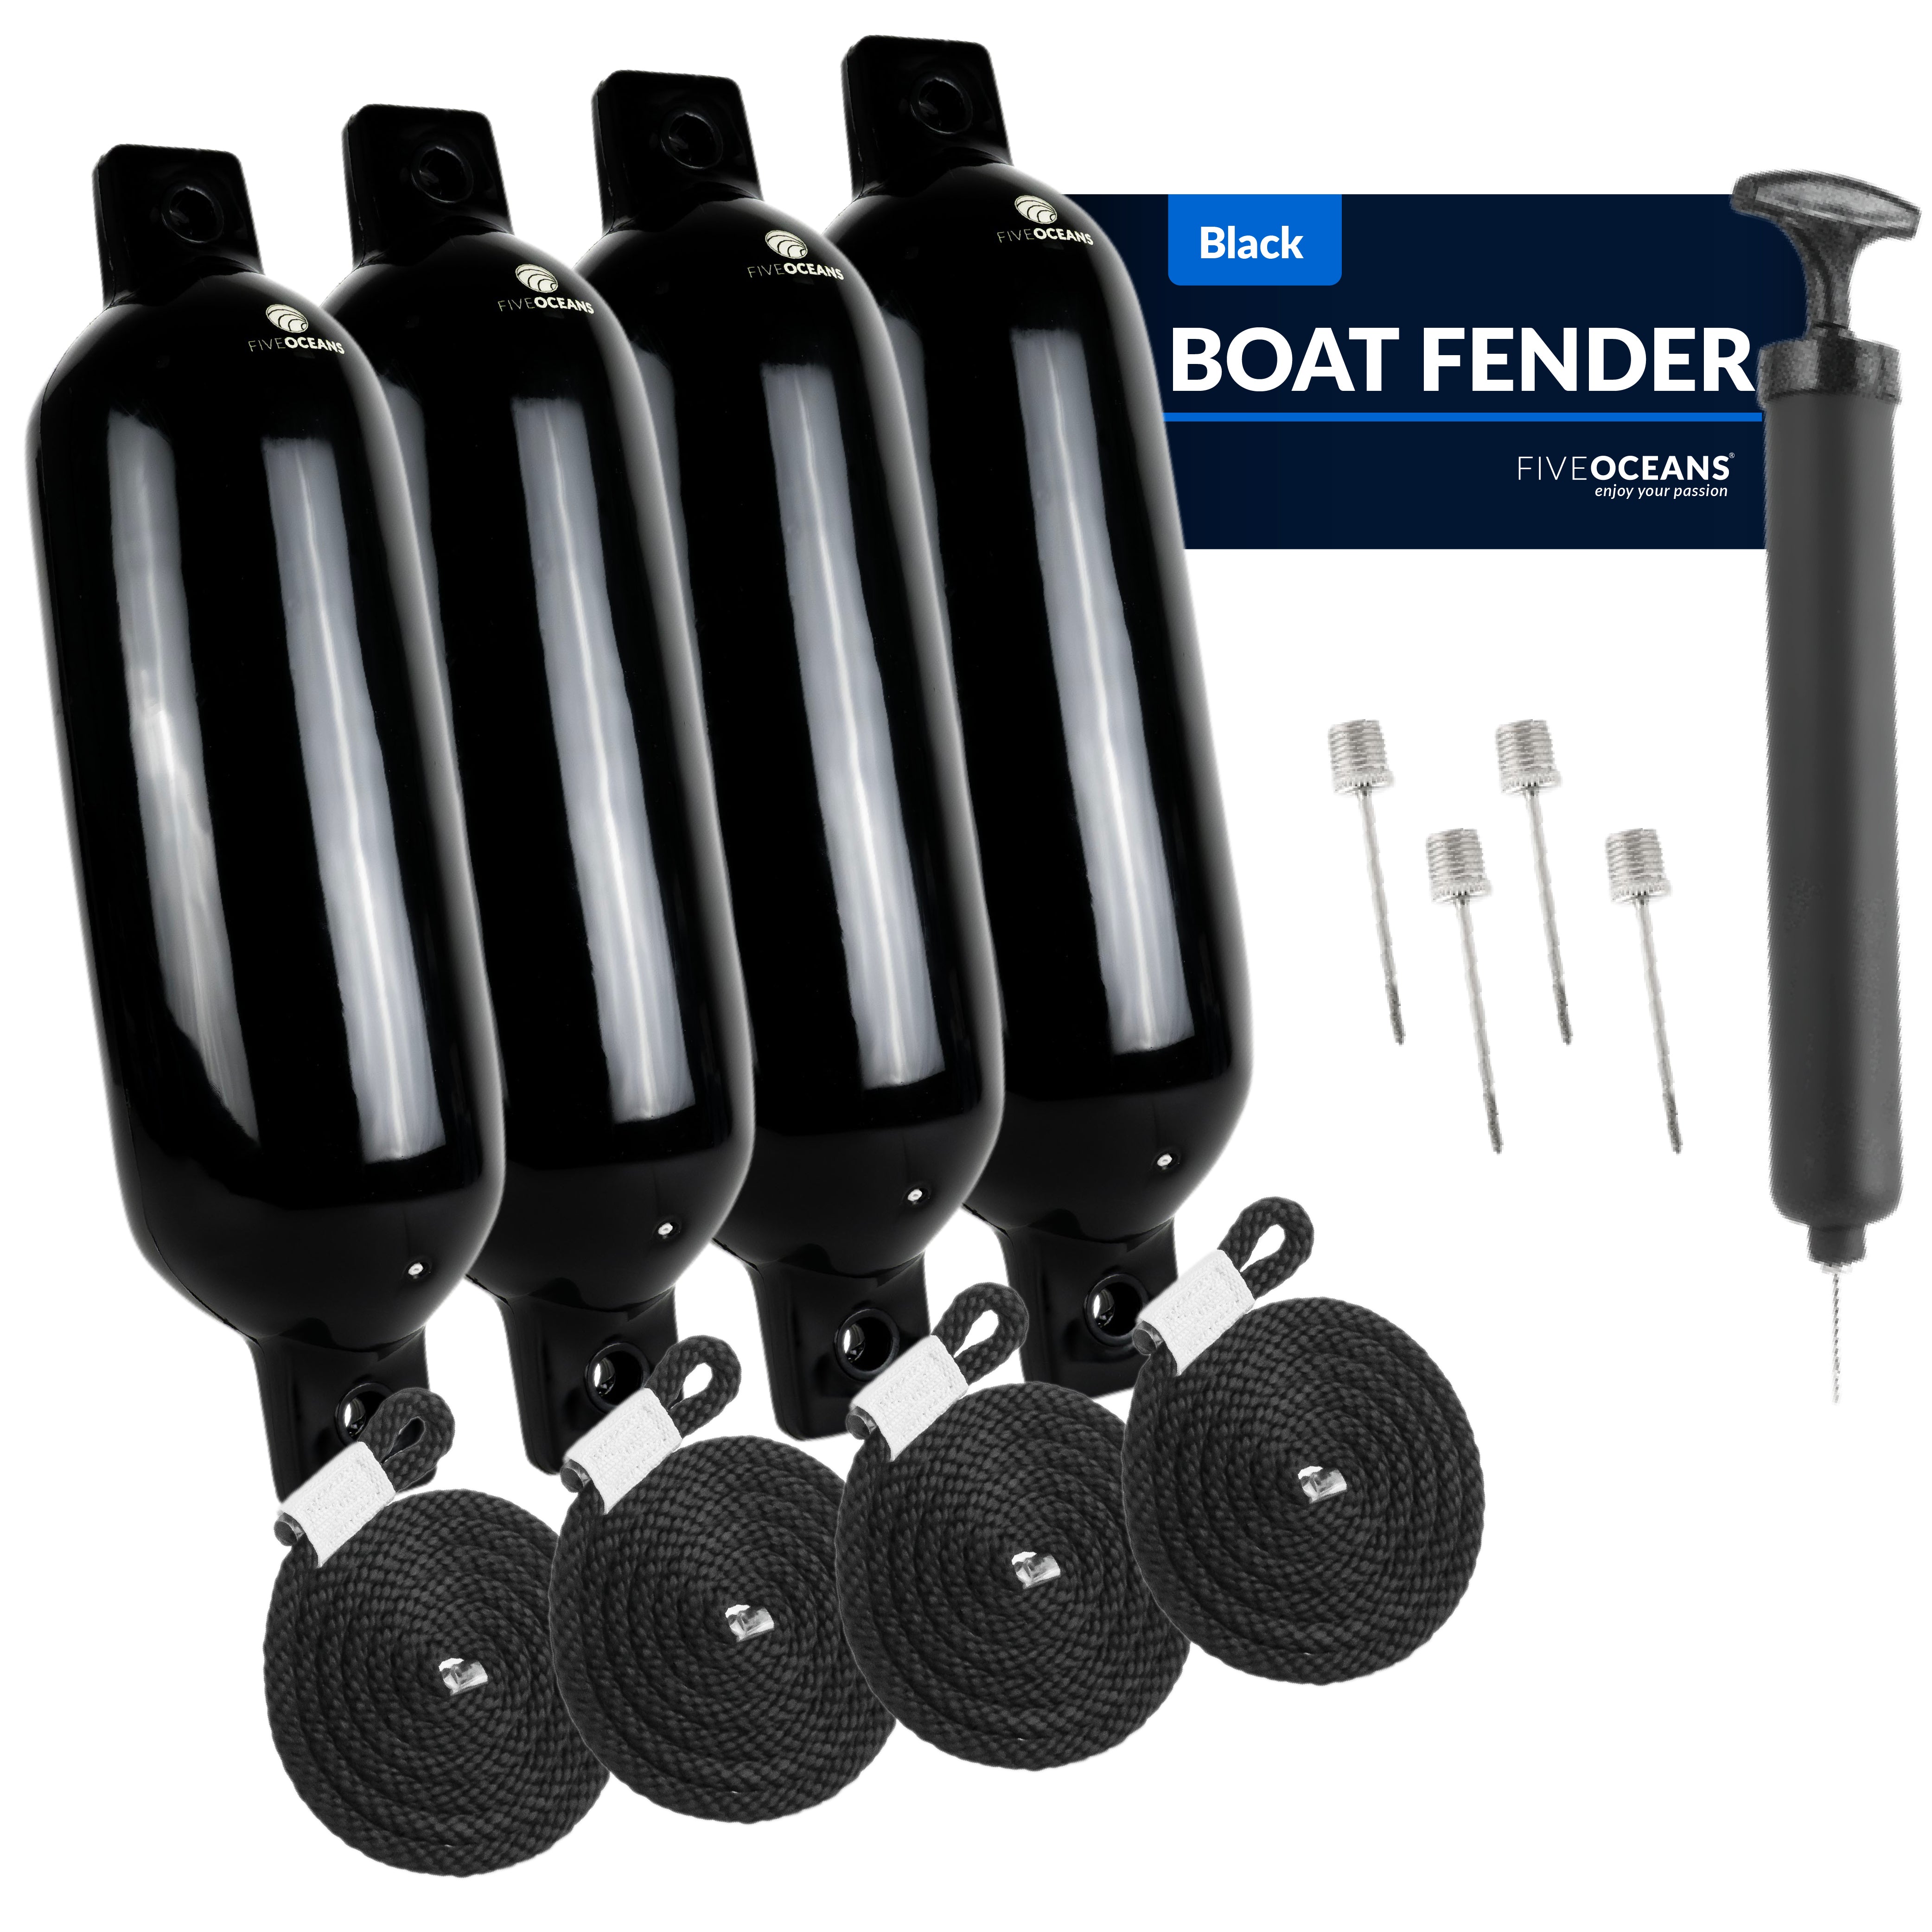 black boat fenders bumpers for docking 4 pack